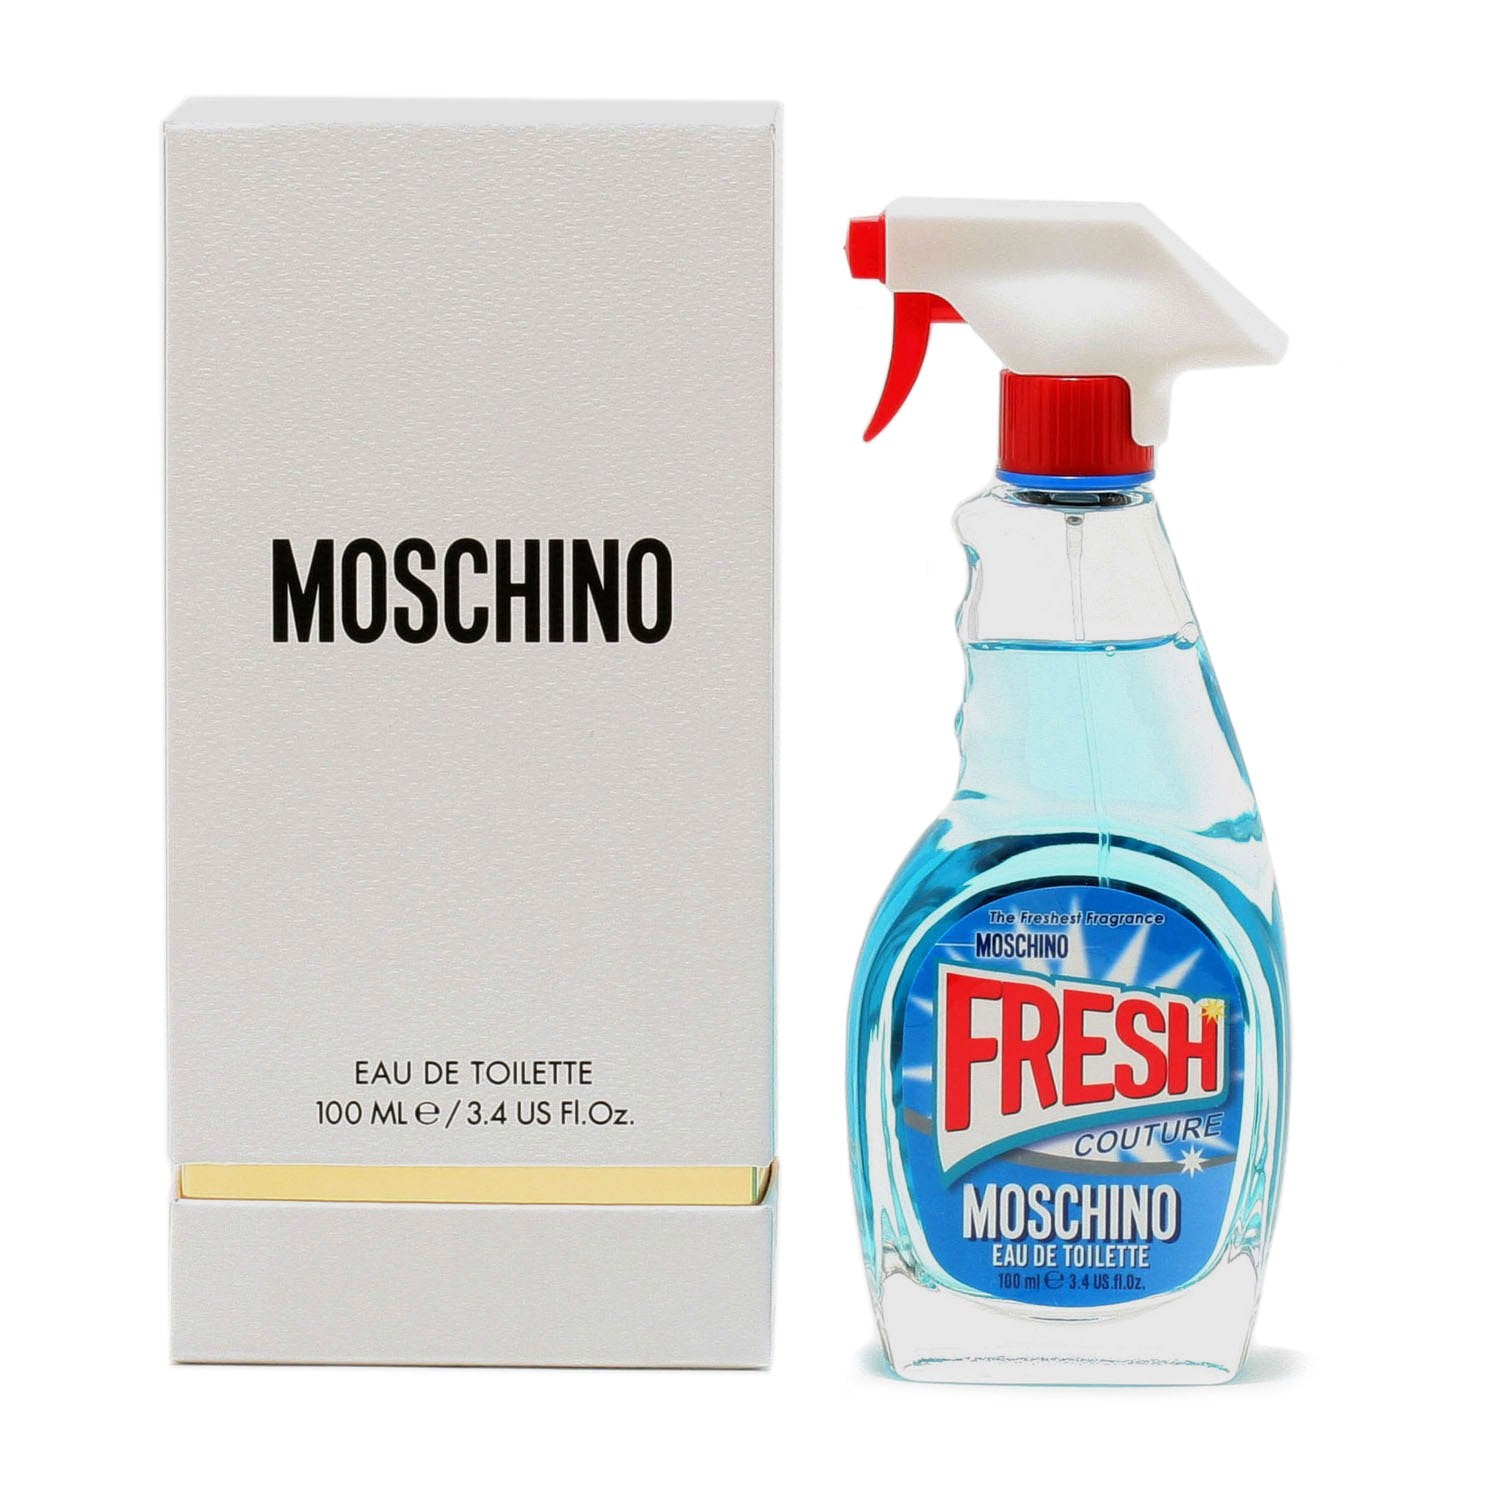 Perfume - MOSCHINO FRESH COUTURE FOR WOMEN - EAU DE TOILETTE SPRAY